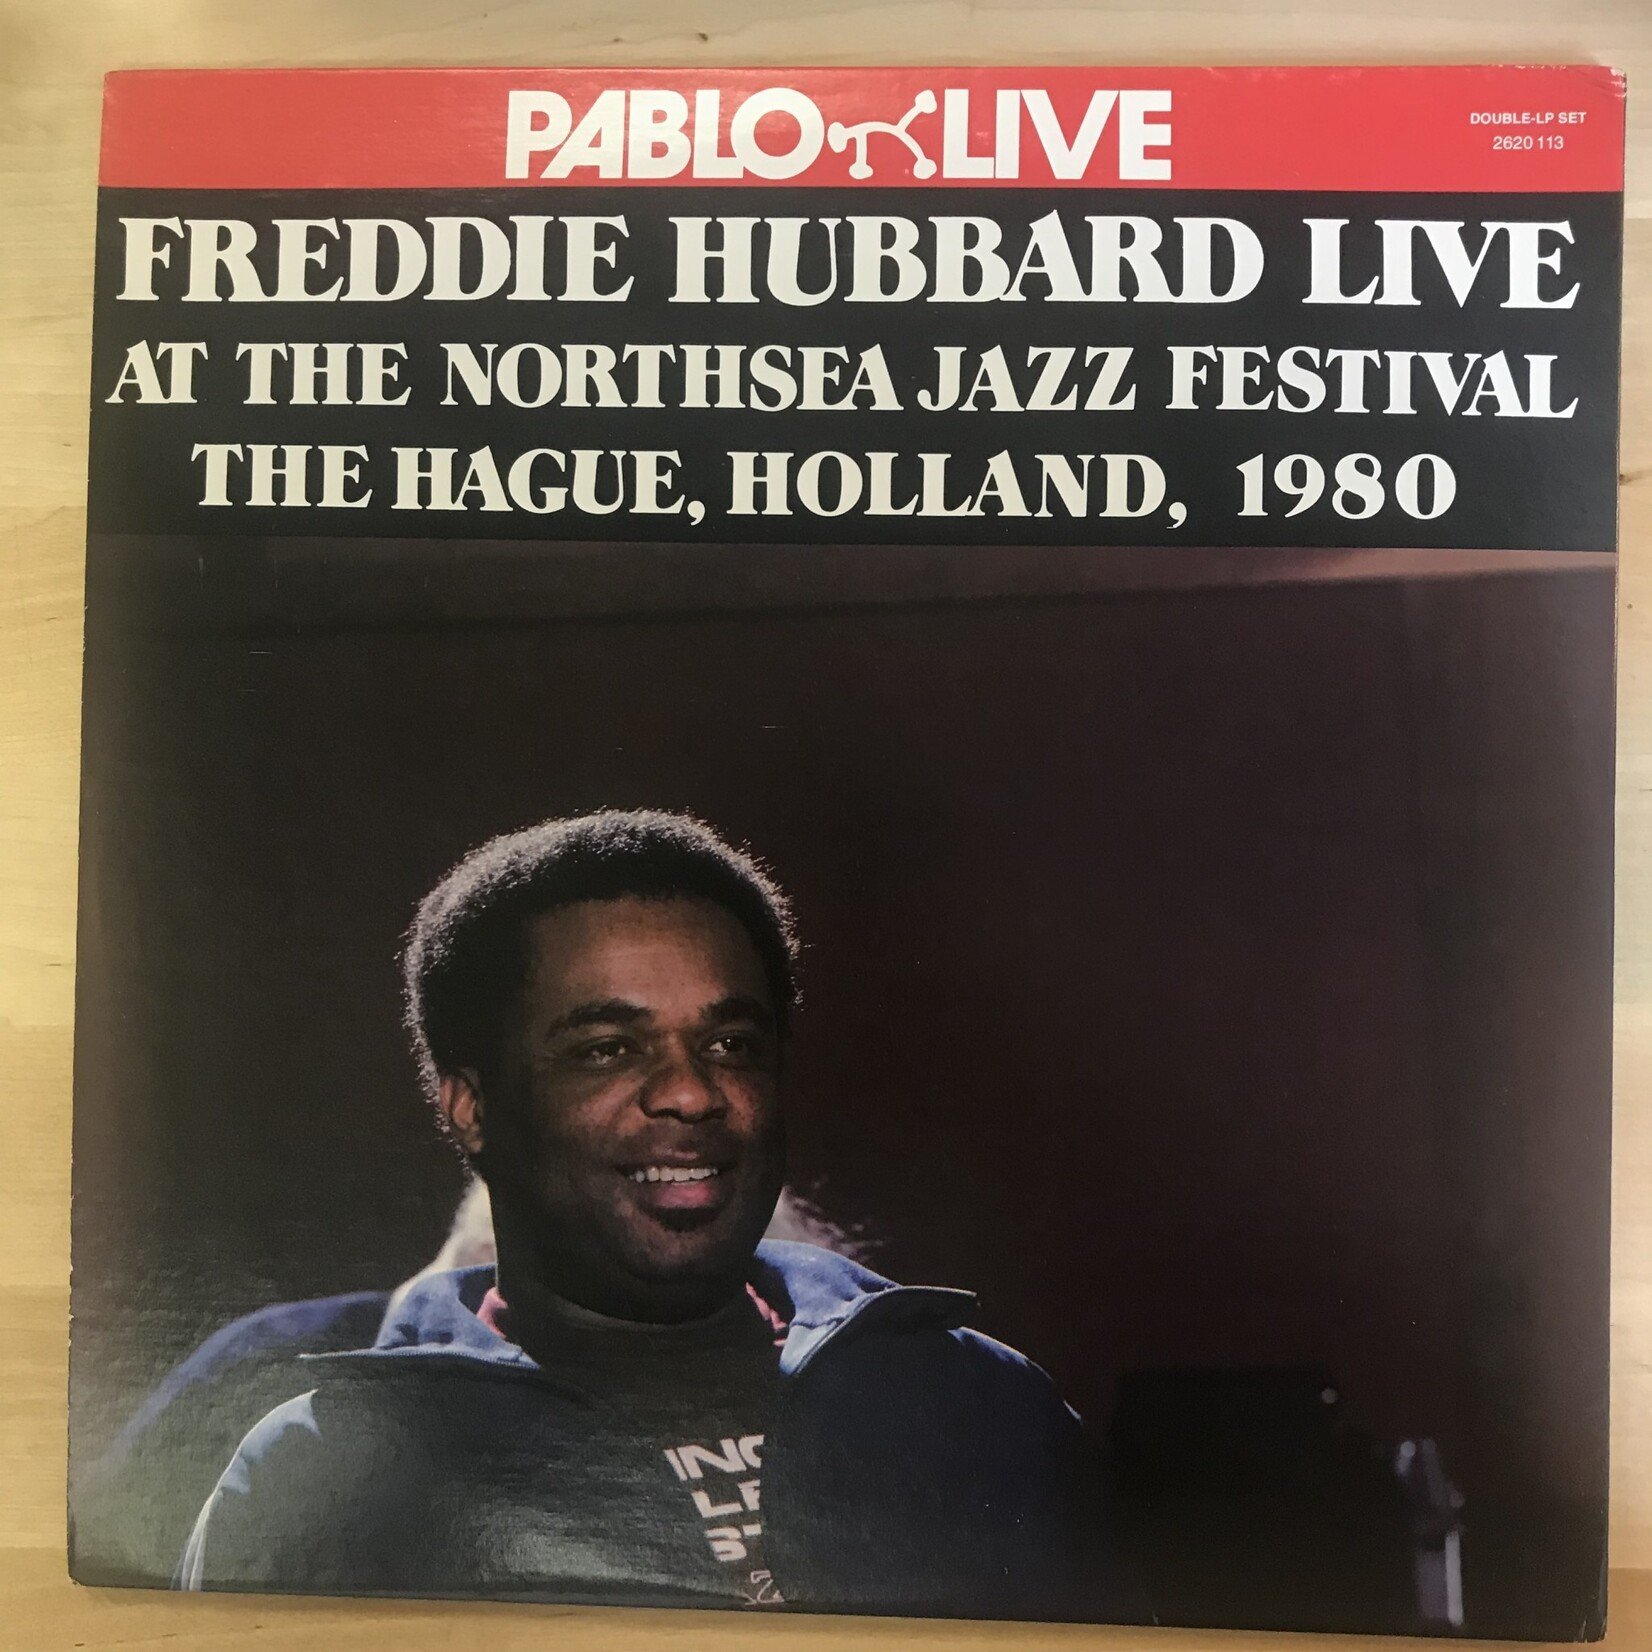 Freddie Hubbard - Live At The Northsea Jazz Festival, The Hague, Holland, 1980 - 2620 113 - Vinyl LP (USED)